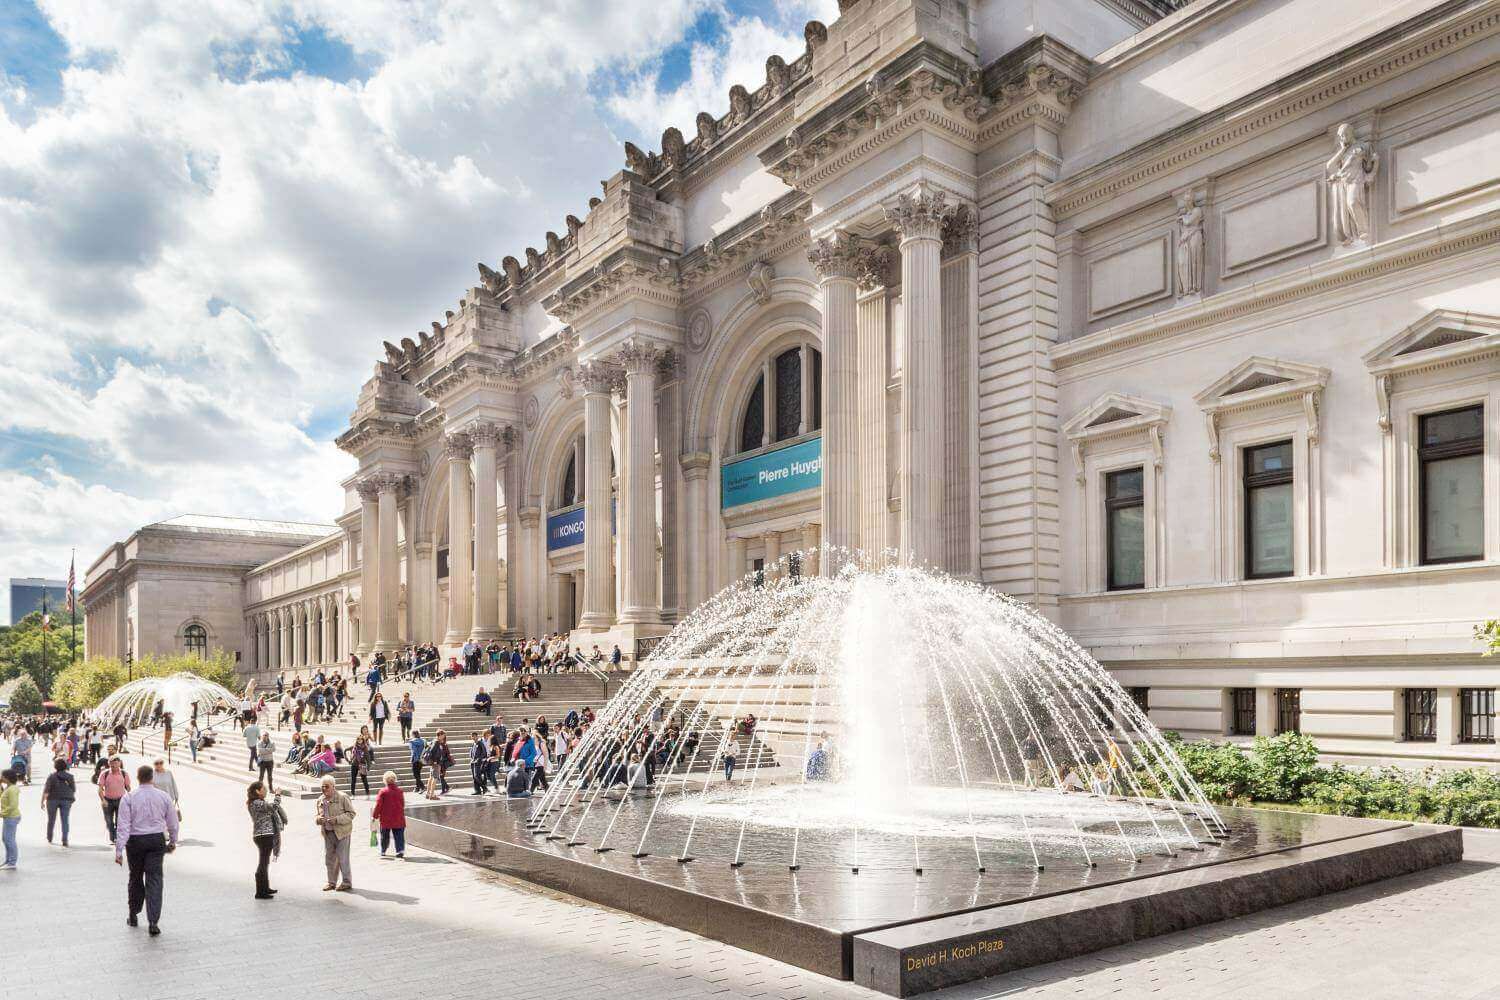 The Metropolitan Museum Of Art in New York City